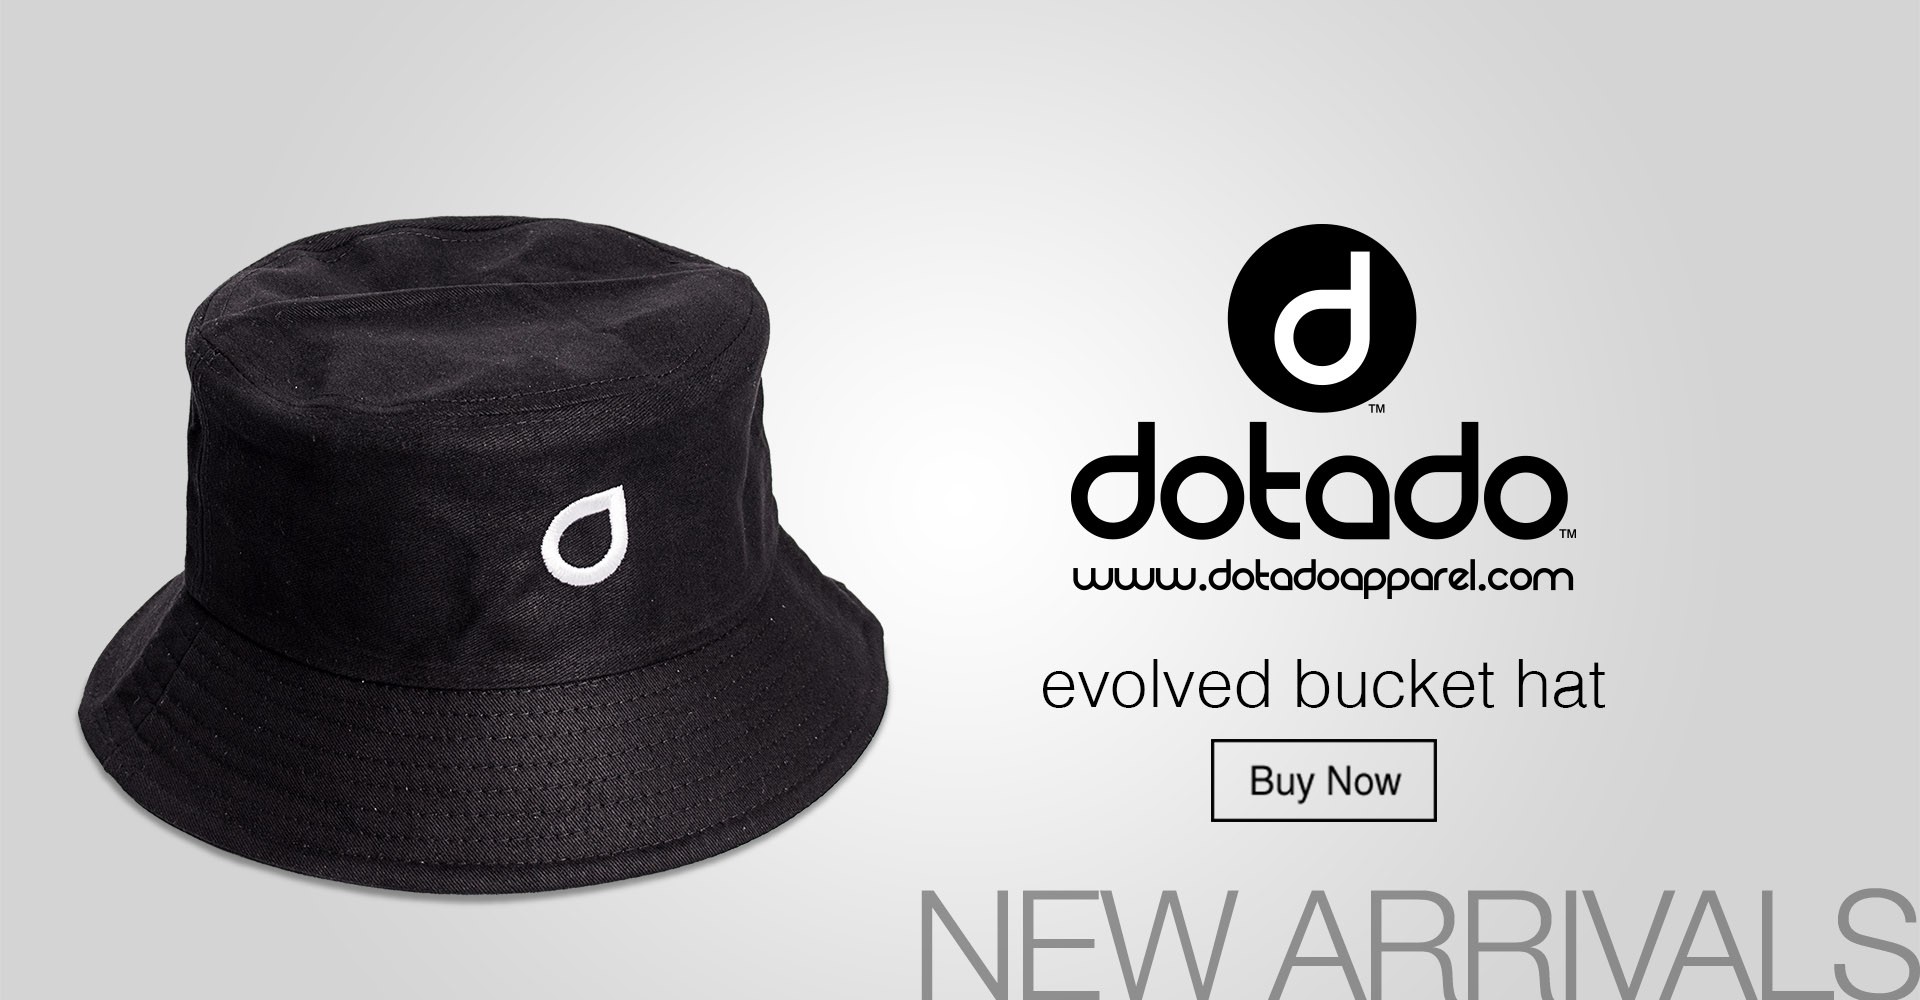 dotado apparel evolved bucket hat new arrival rotating banner